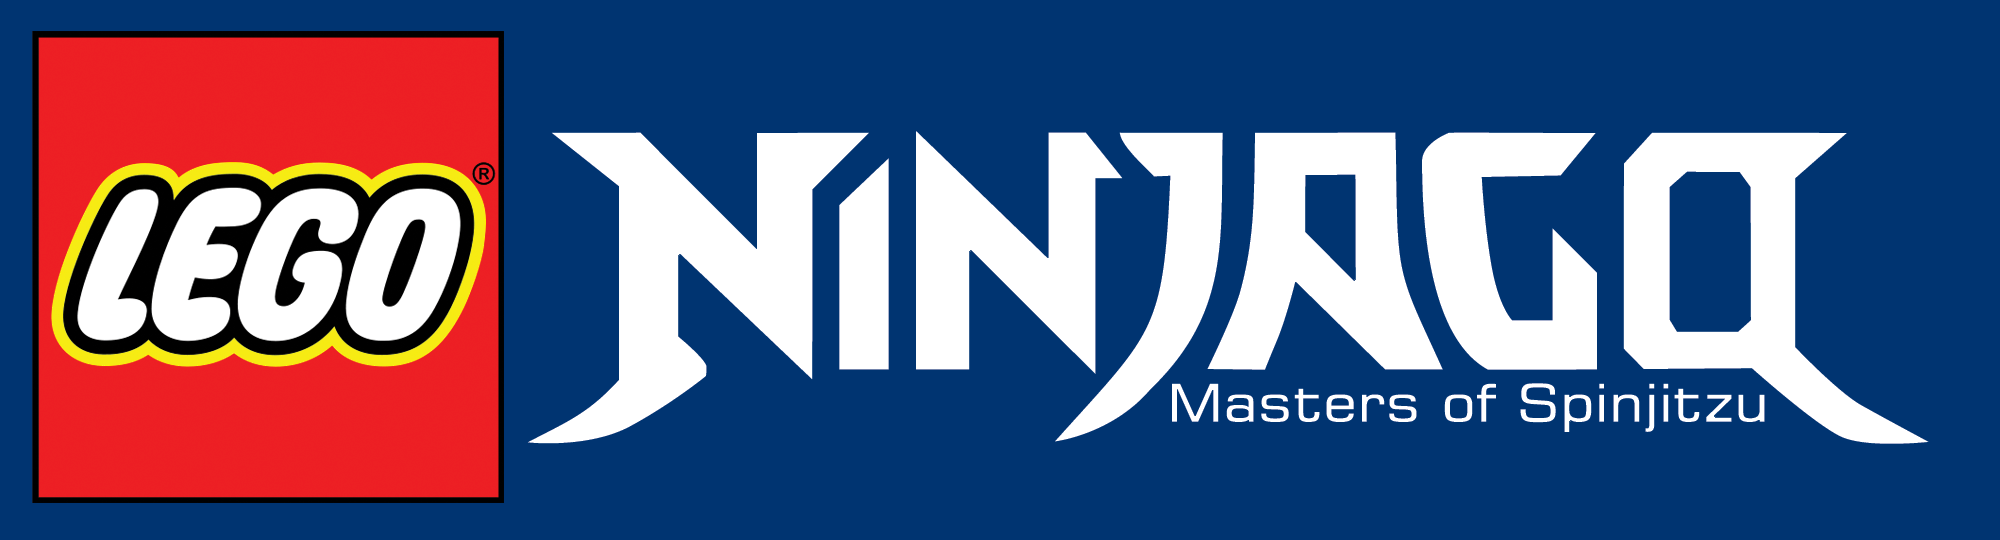 Ninjago Logo - Ninjago Logos